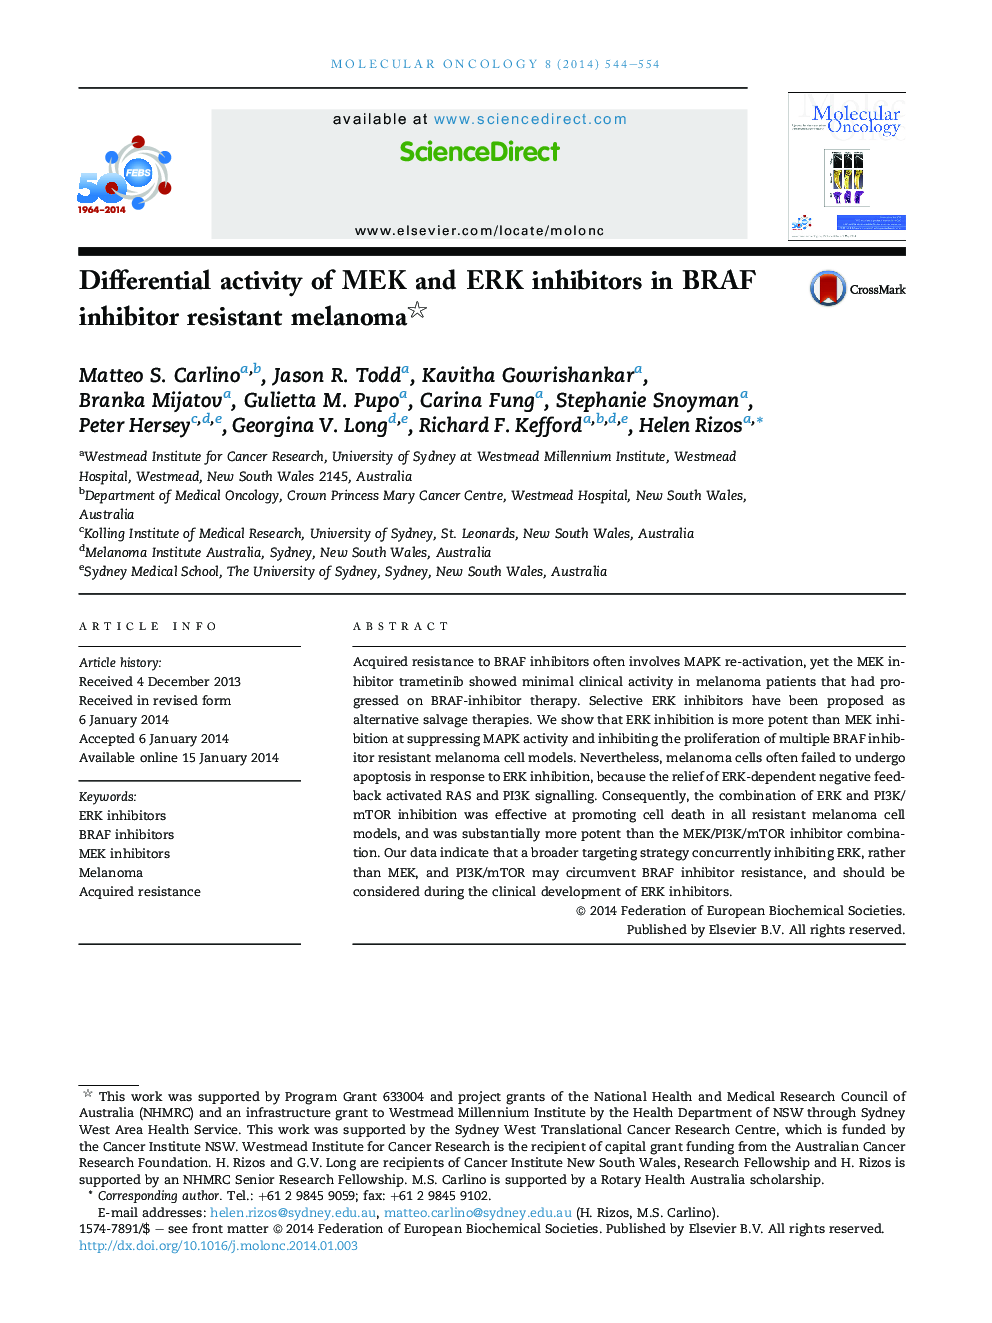 Differential activity of MEK and ERK inhibitors in BRAF inhibitor resistant melanoma